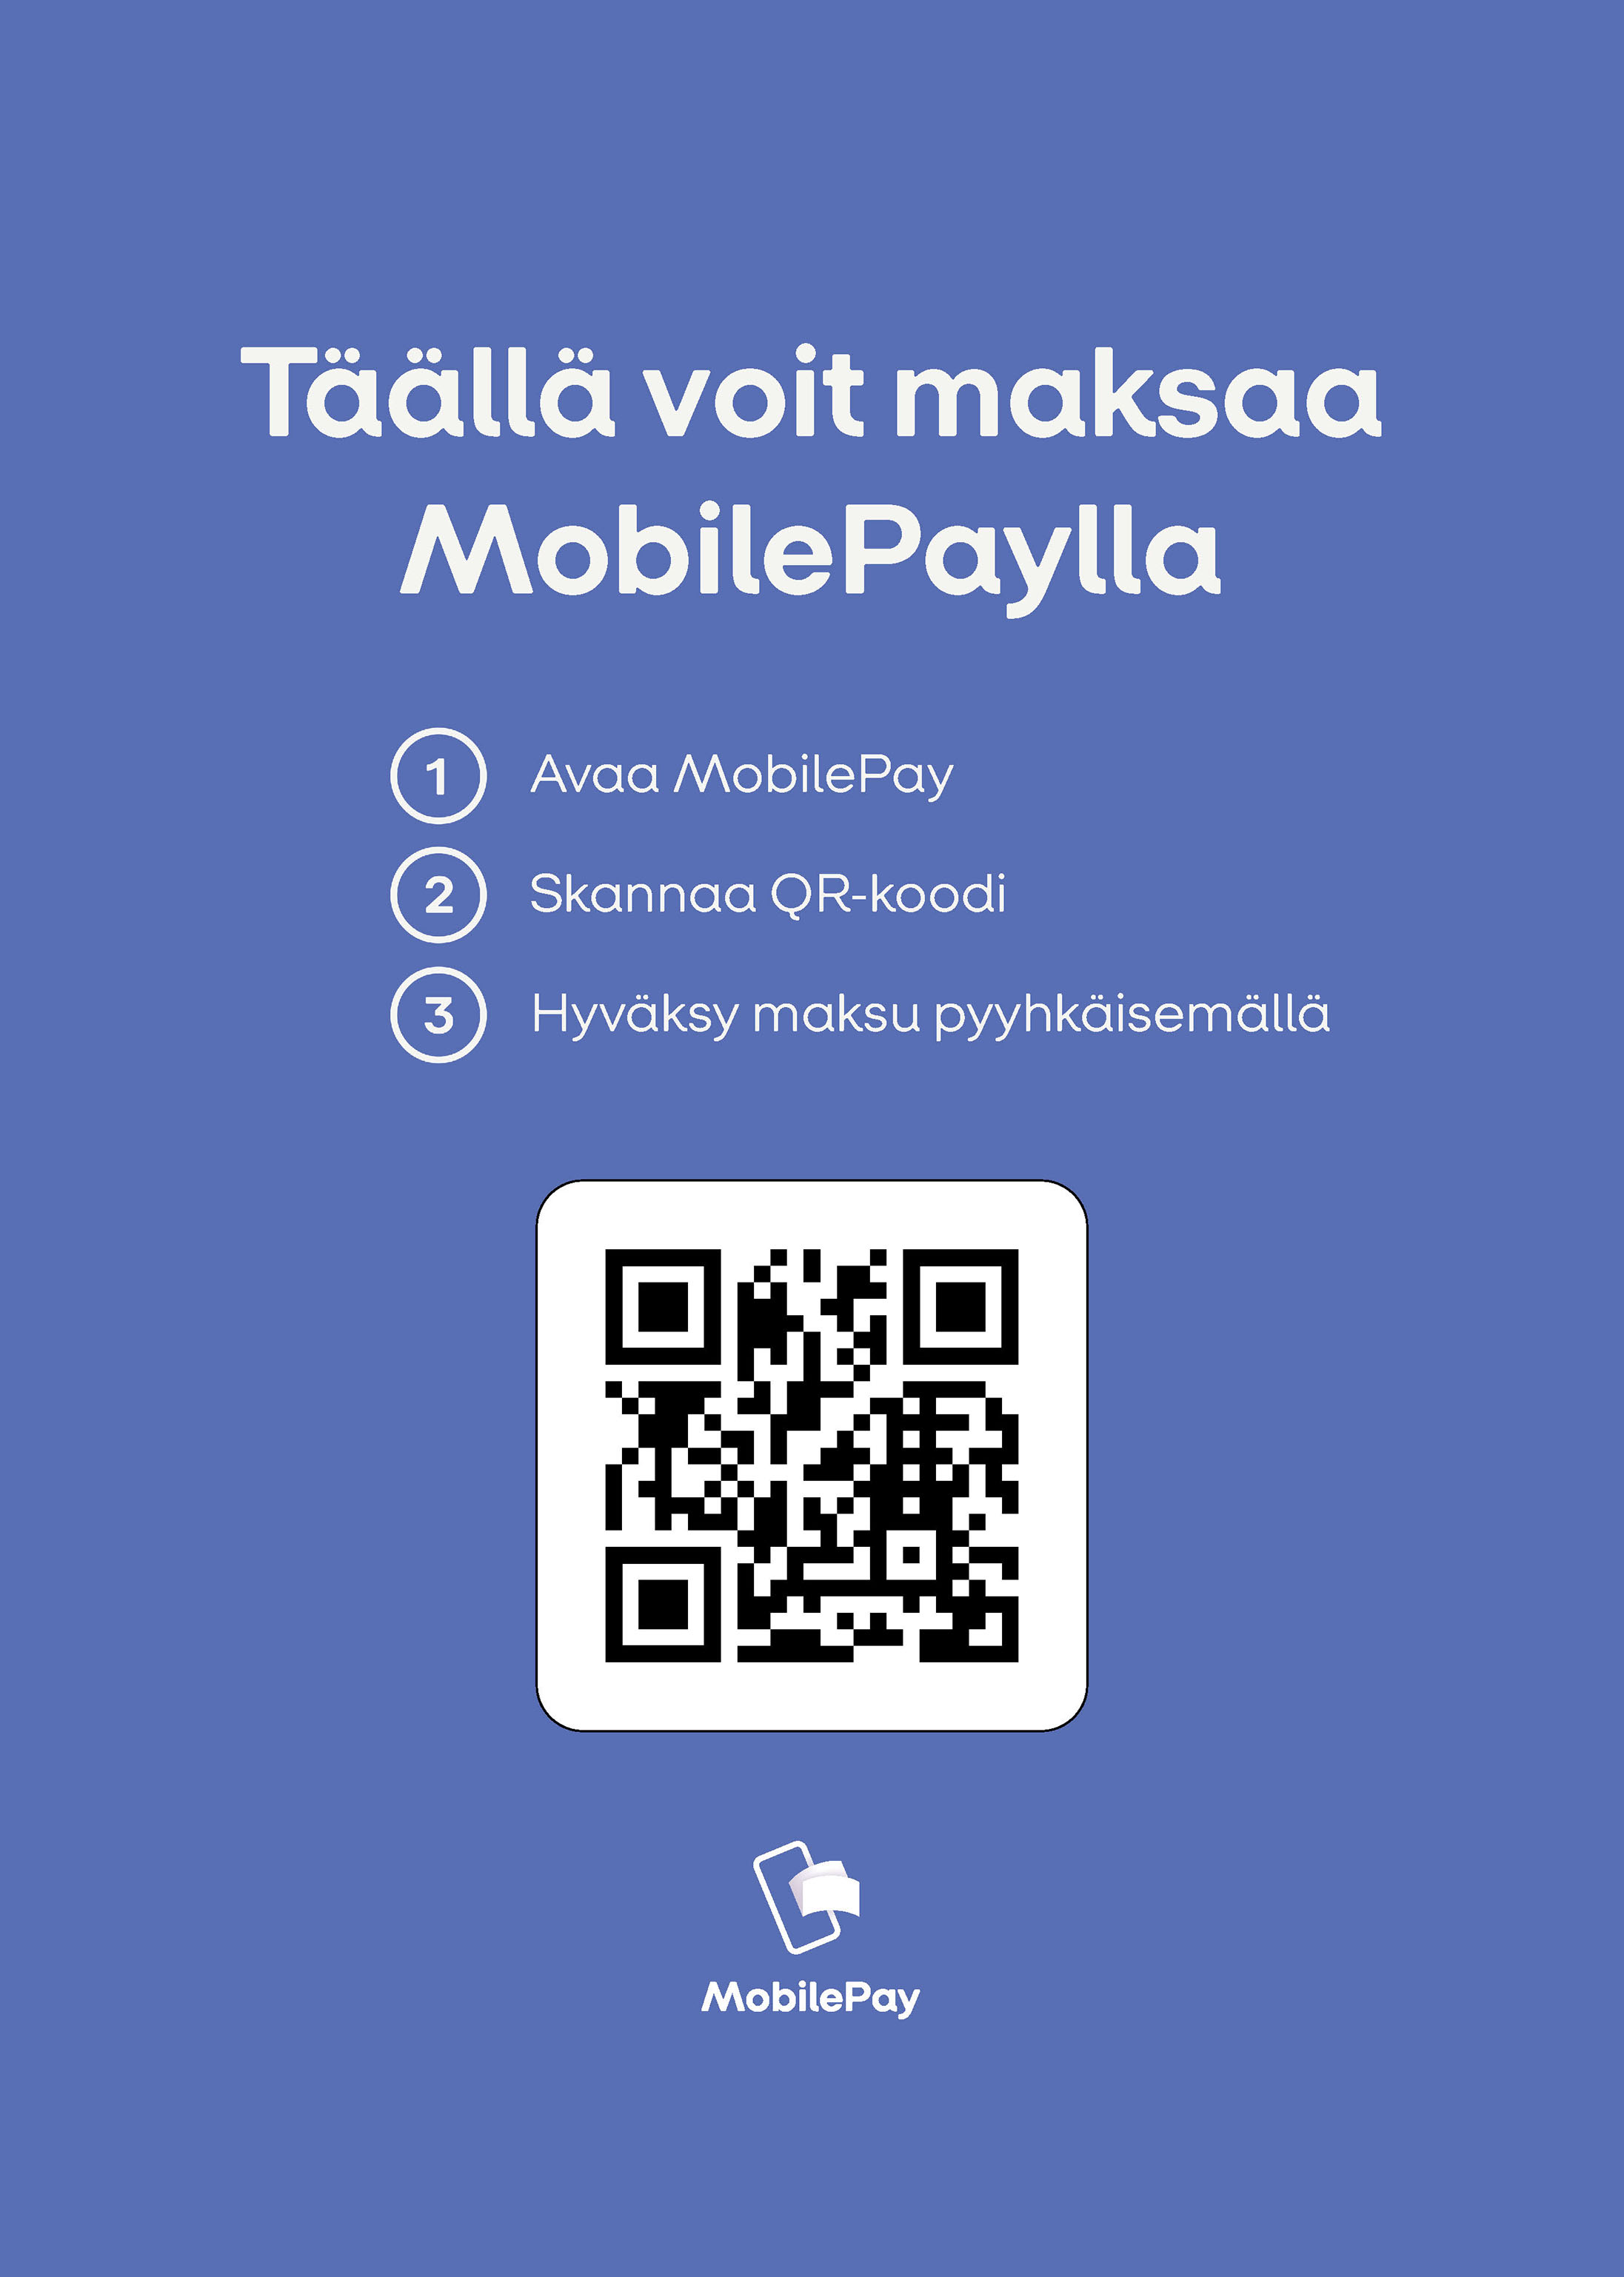 MobilePay PoS opaste yrityksille